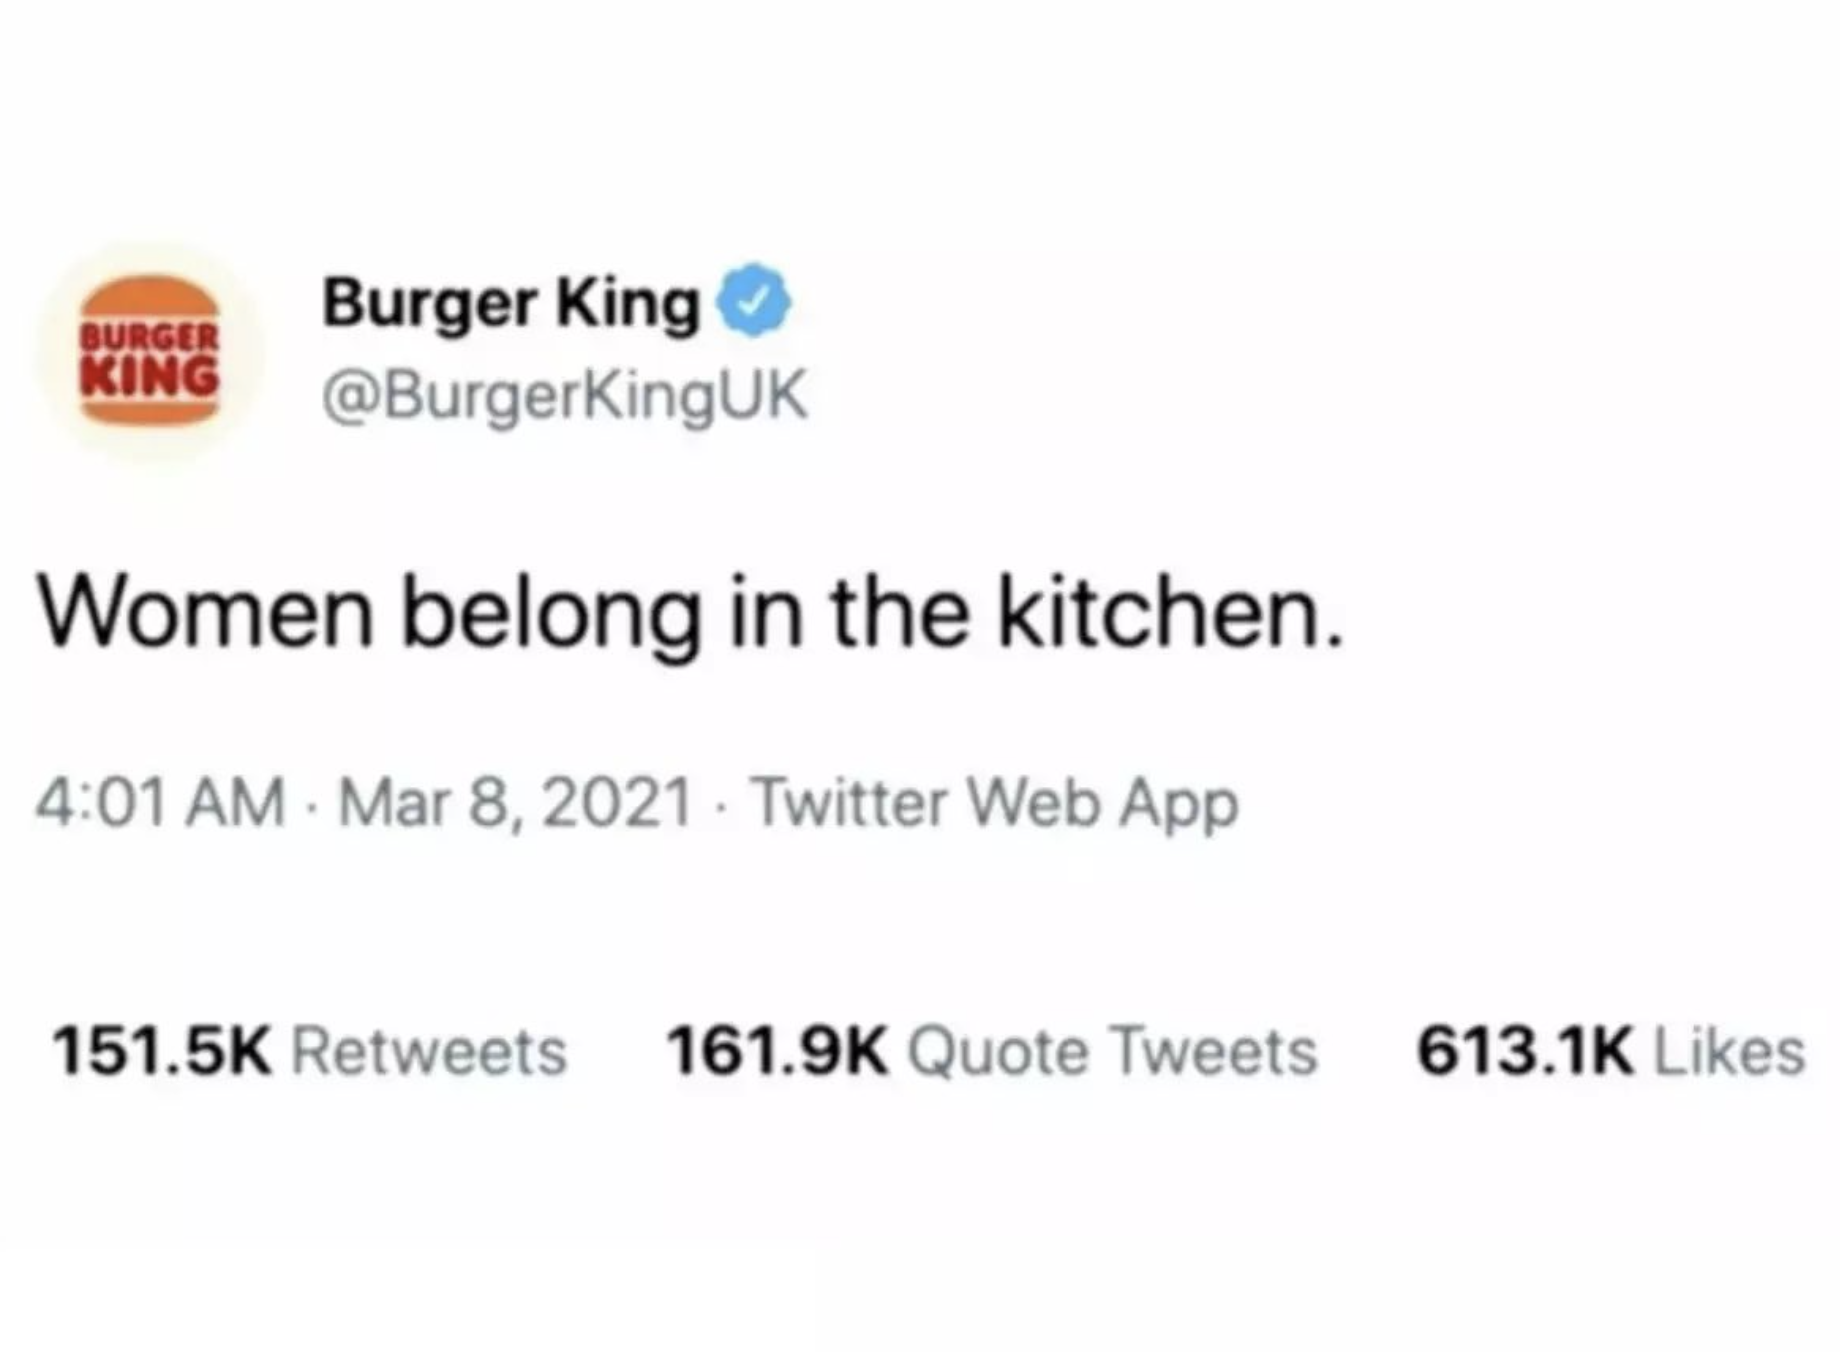 paper - Burger King Burger King Women belong in the kitchen. Twitter Web App Quote Tweets